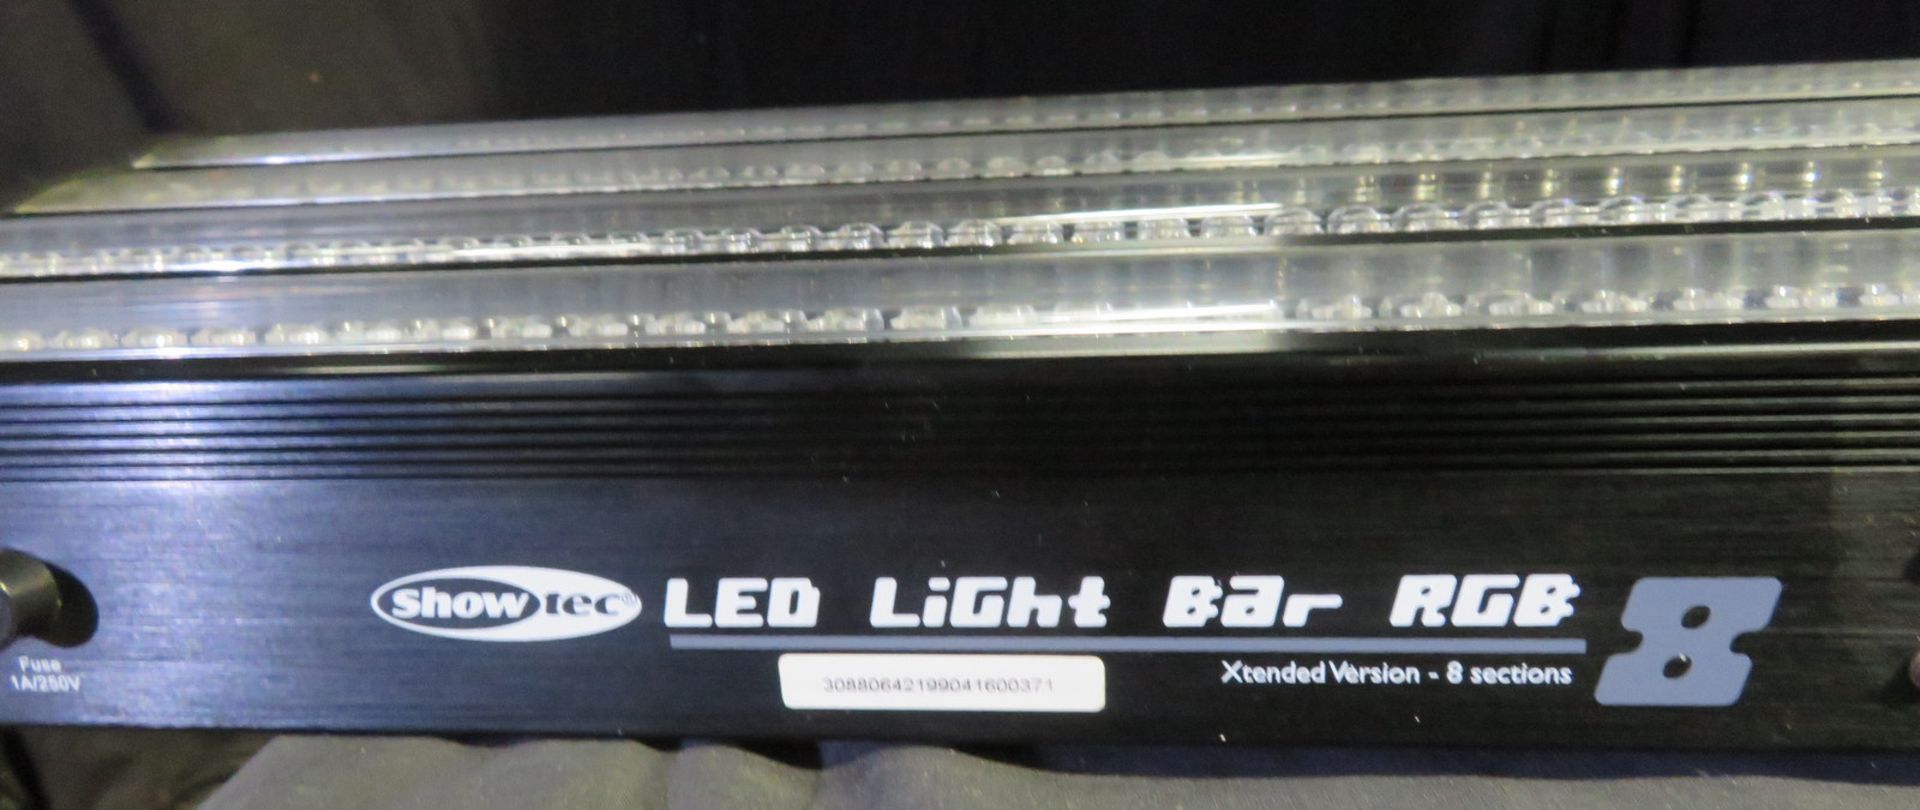 4x Showtec LED Lightbar RGB 8. All working - Image 7 of 7